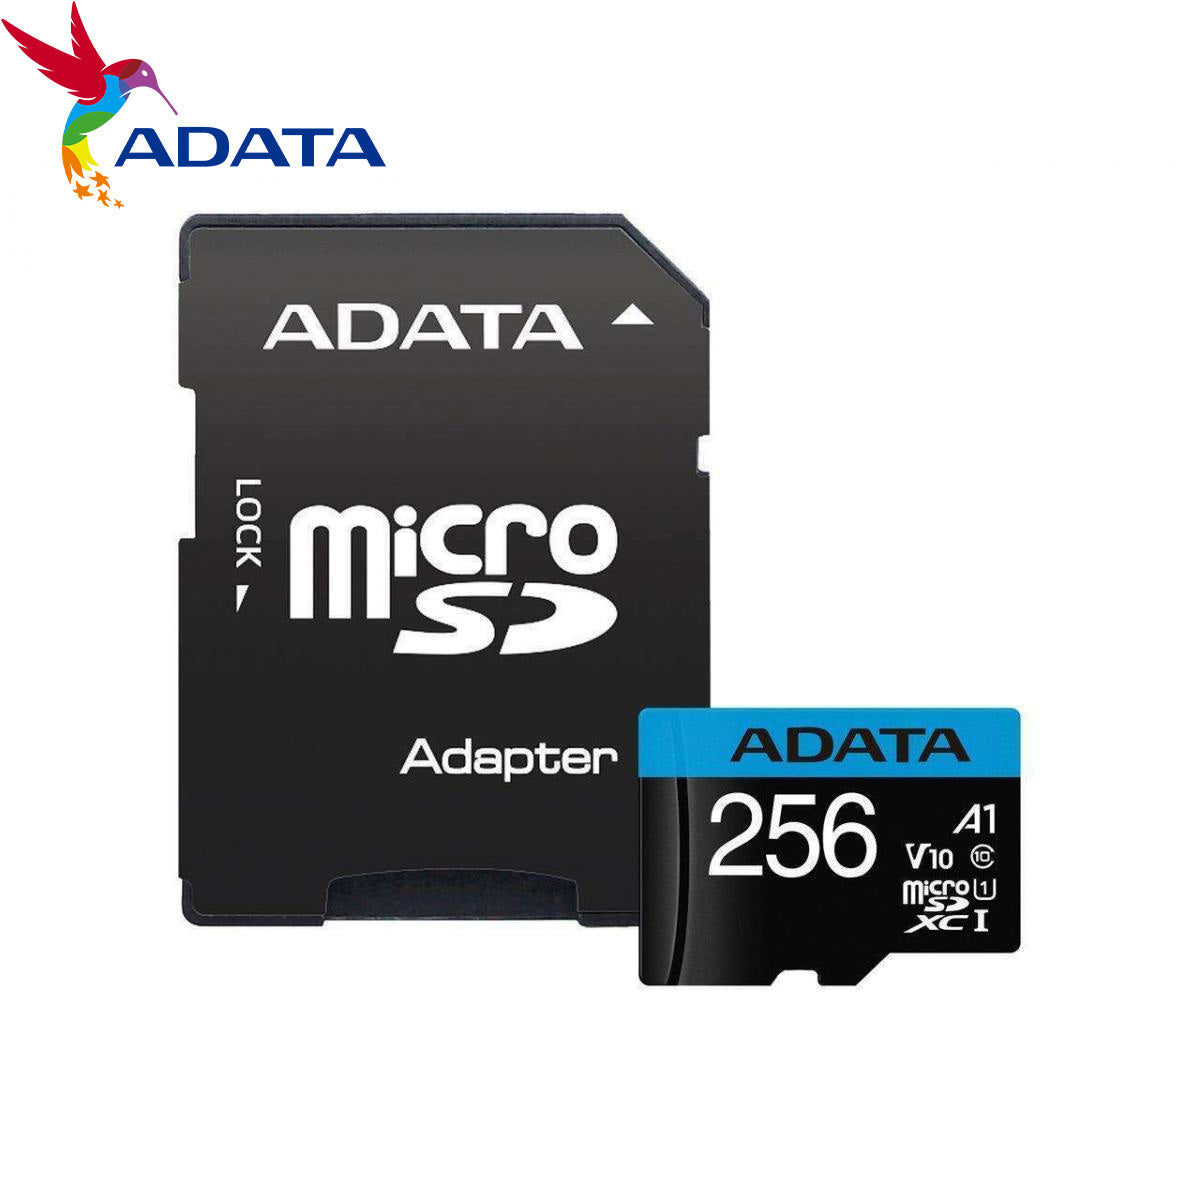 ADATA MICROSDXC 256GB UHS-I CLASS10 85 RETAIL